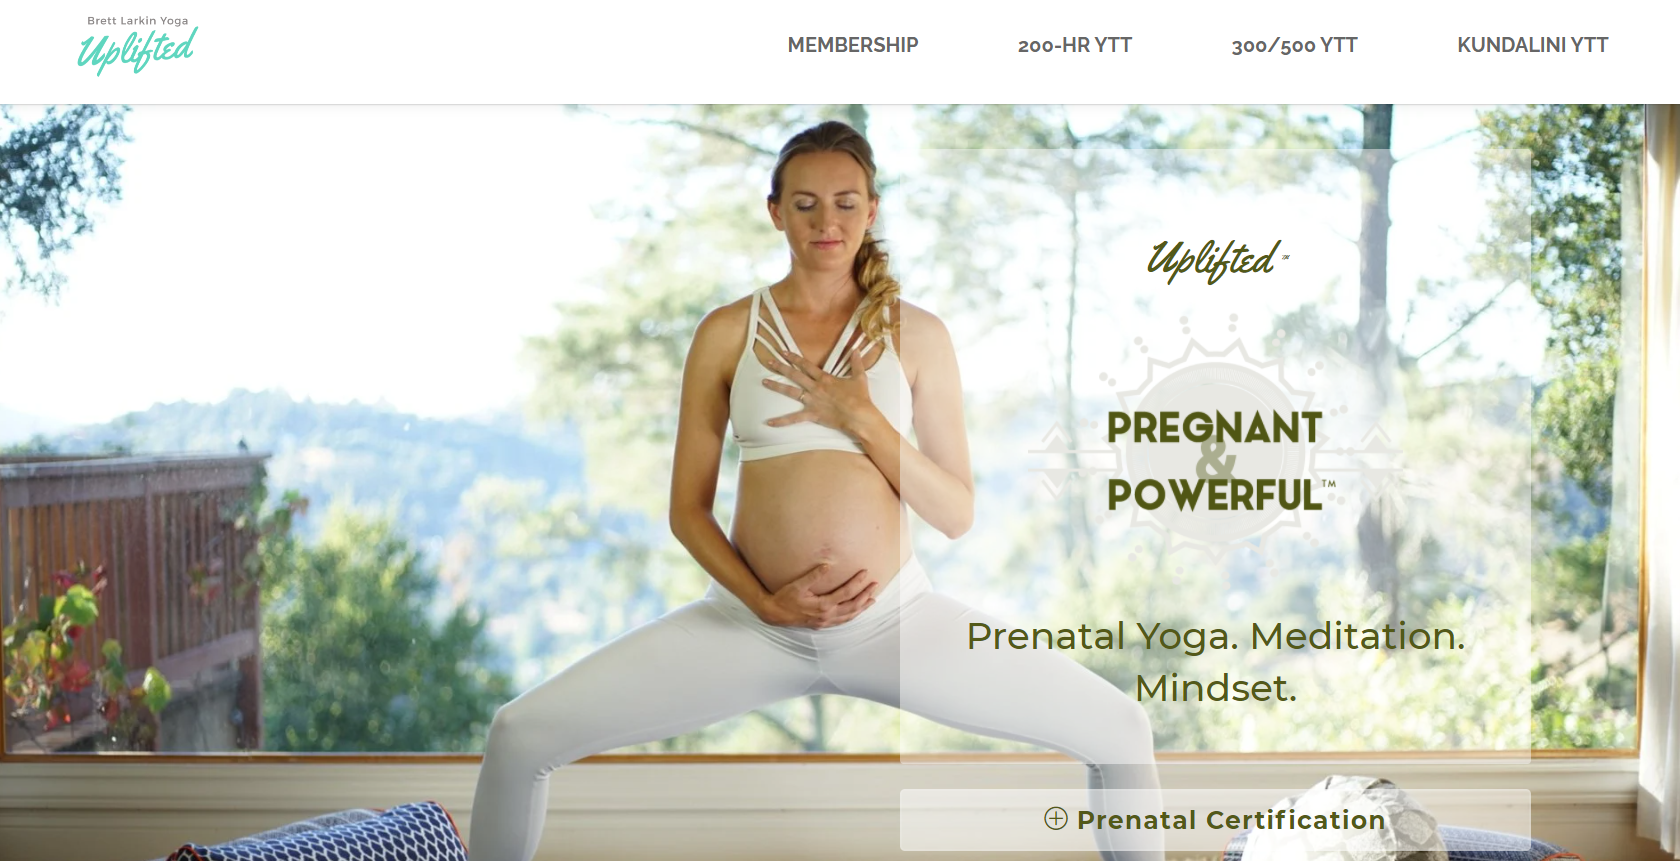 Brett Larkin Prenatal Yoga